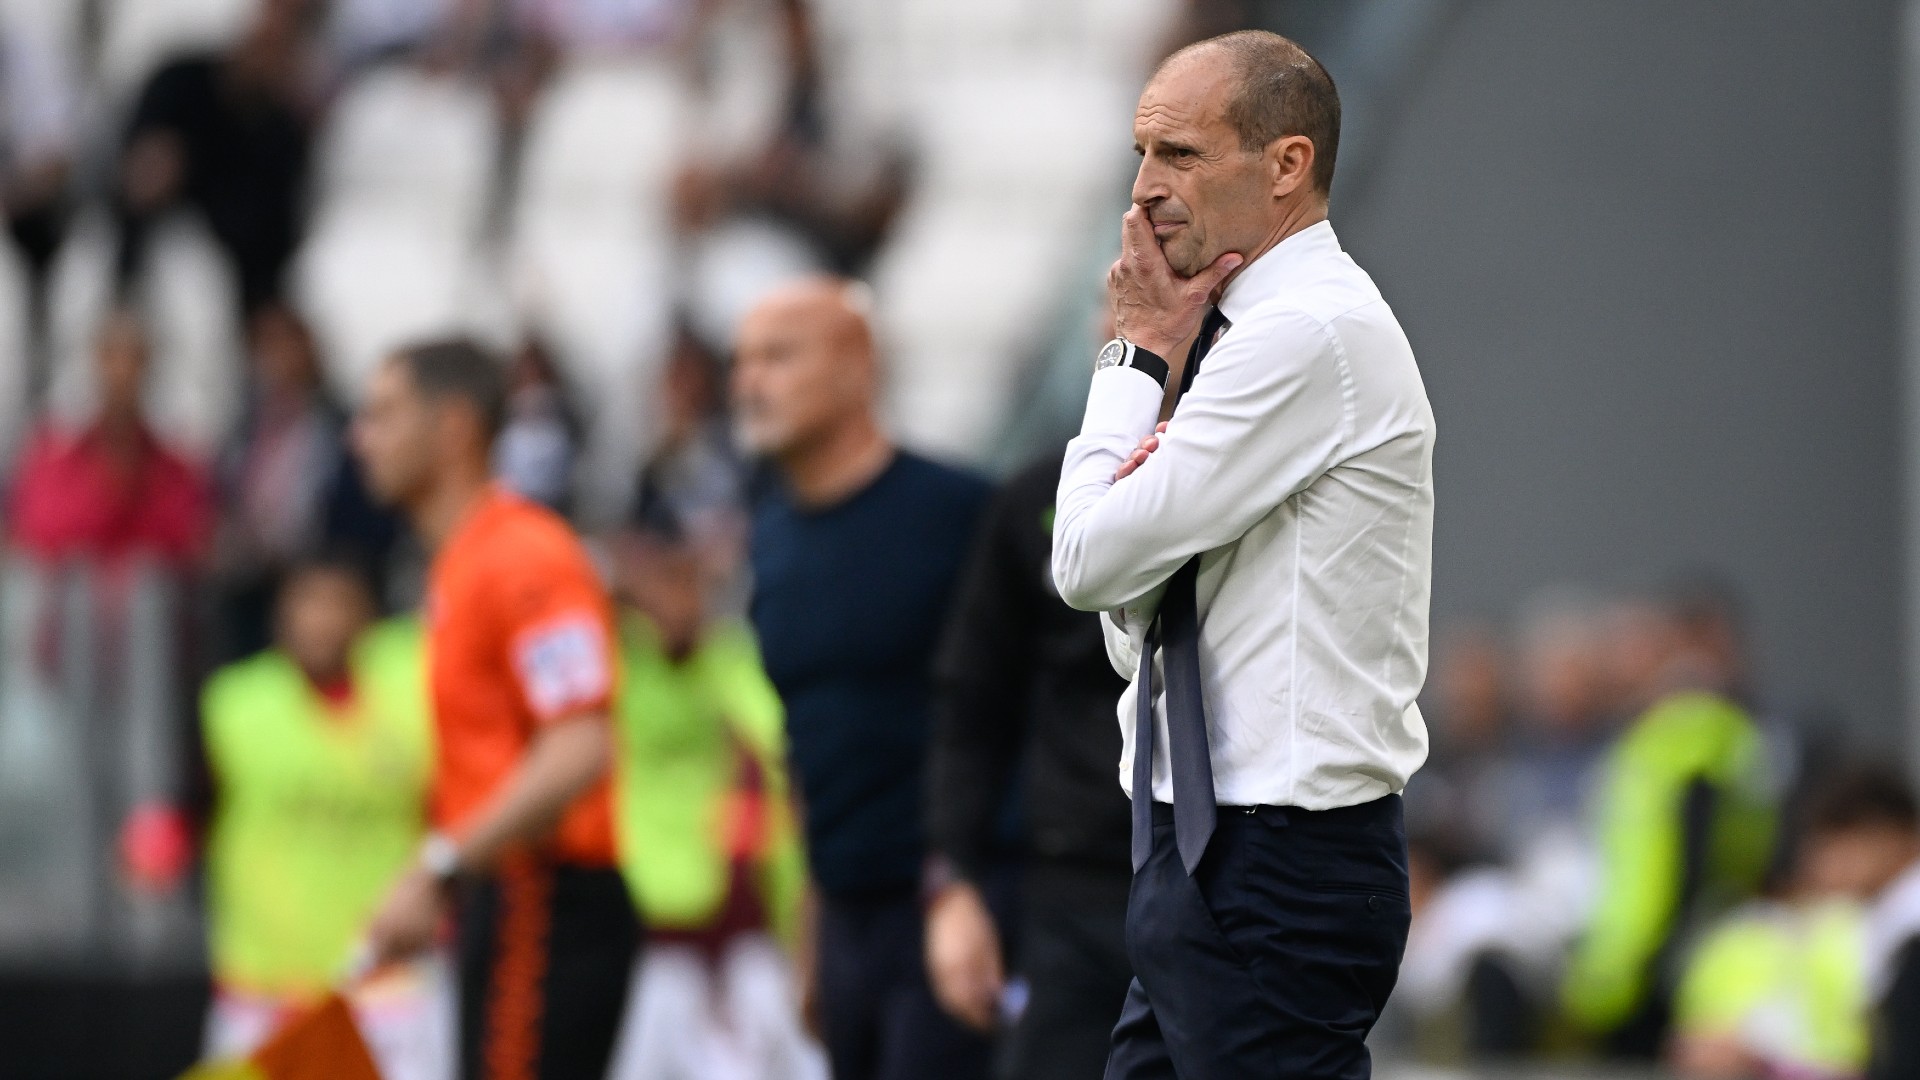 Juventus sack head coach Allegri